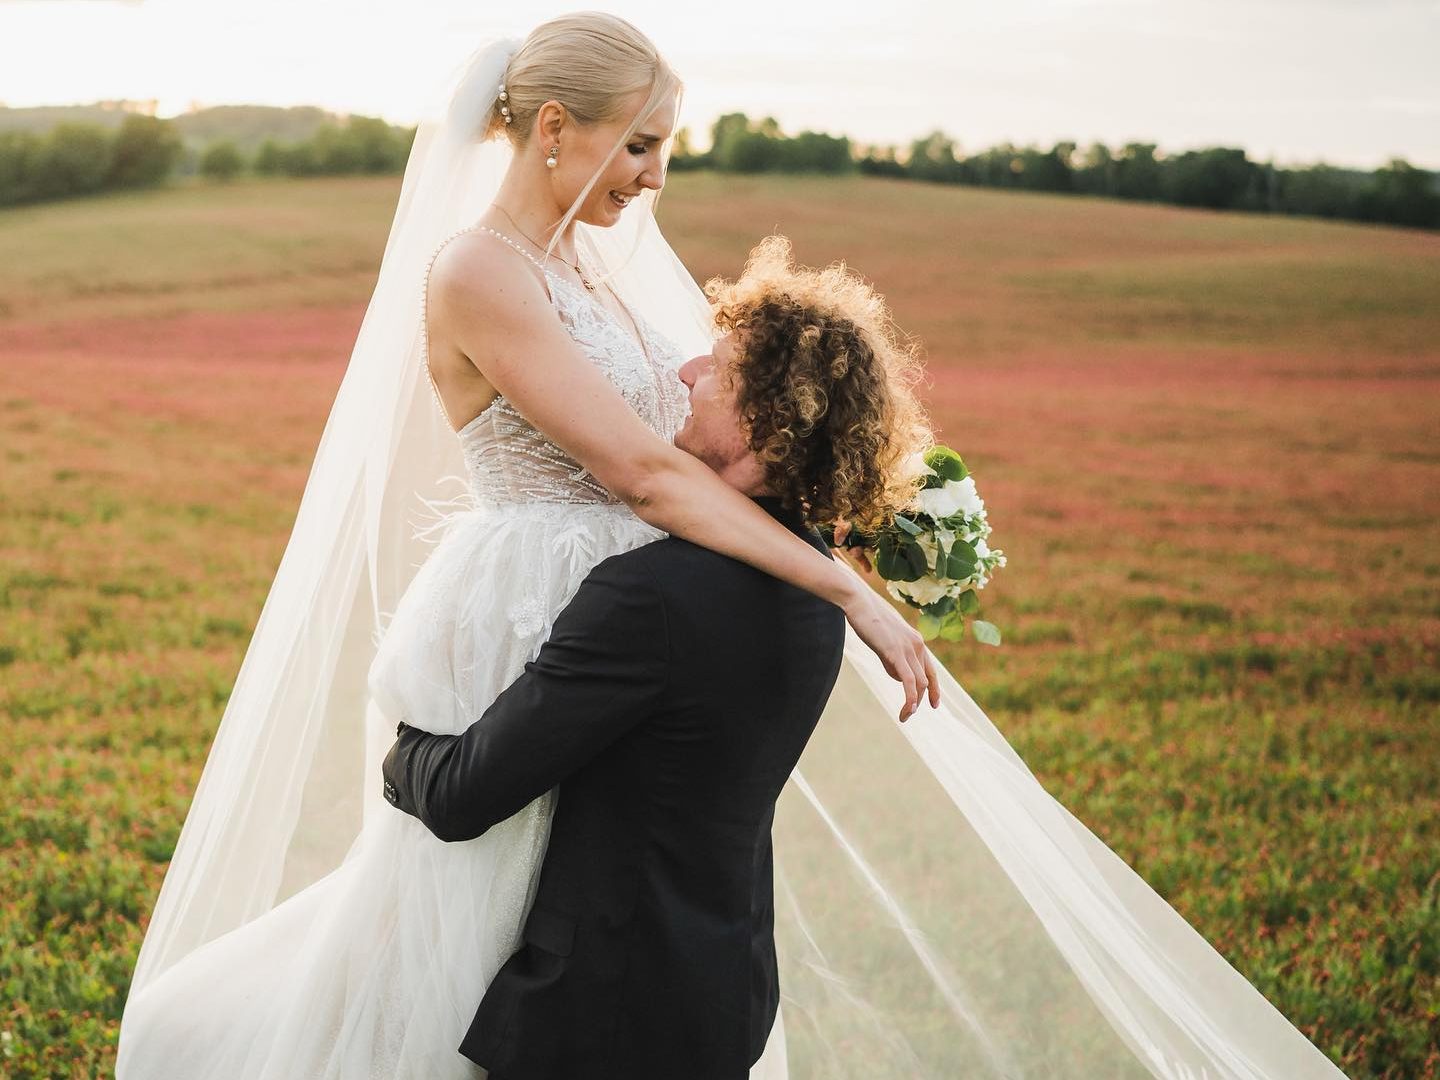 Marketa Havlickova and Alex Krаl got married in 2022. (Credit: Instagram)